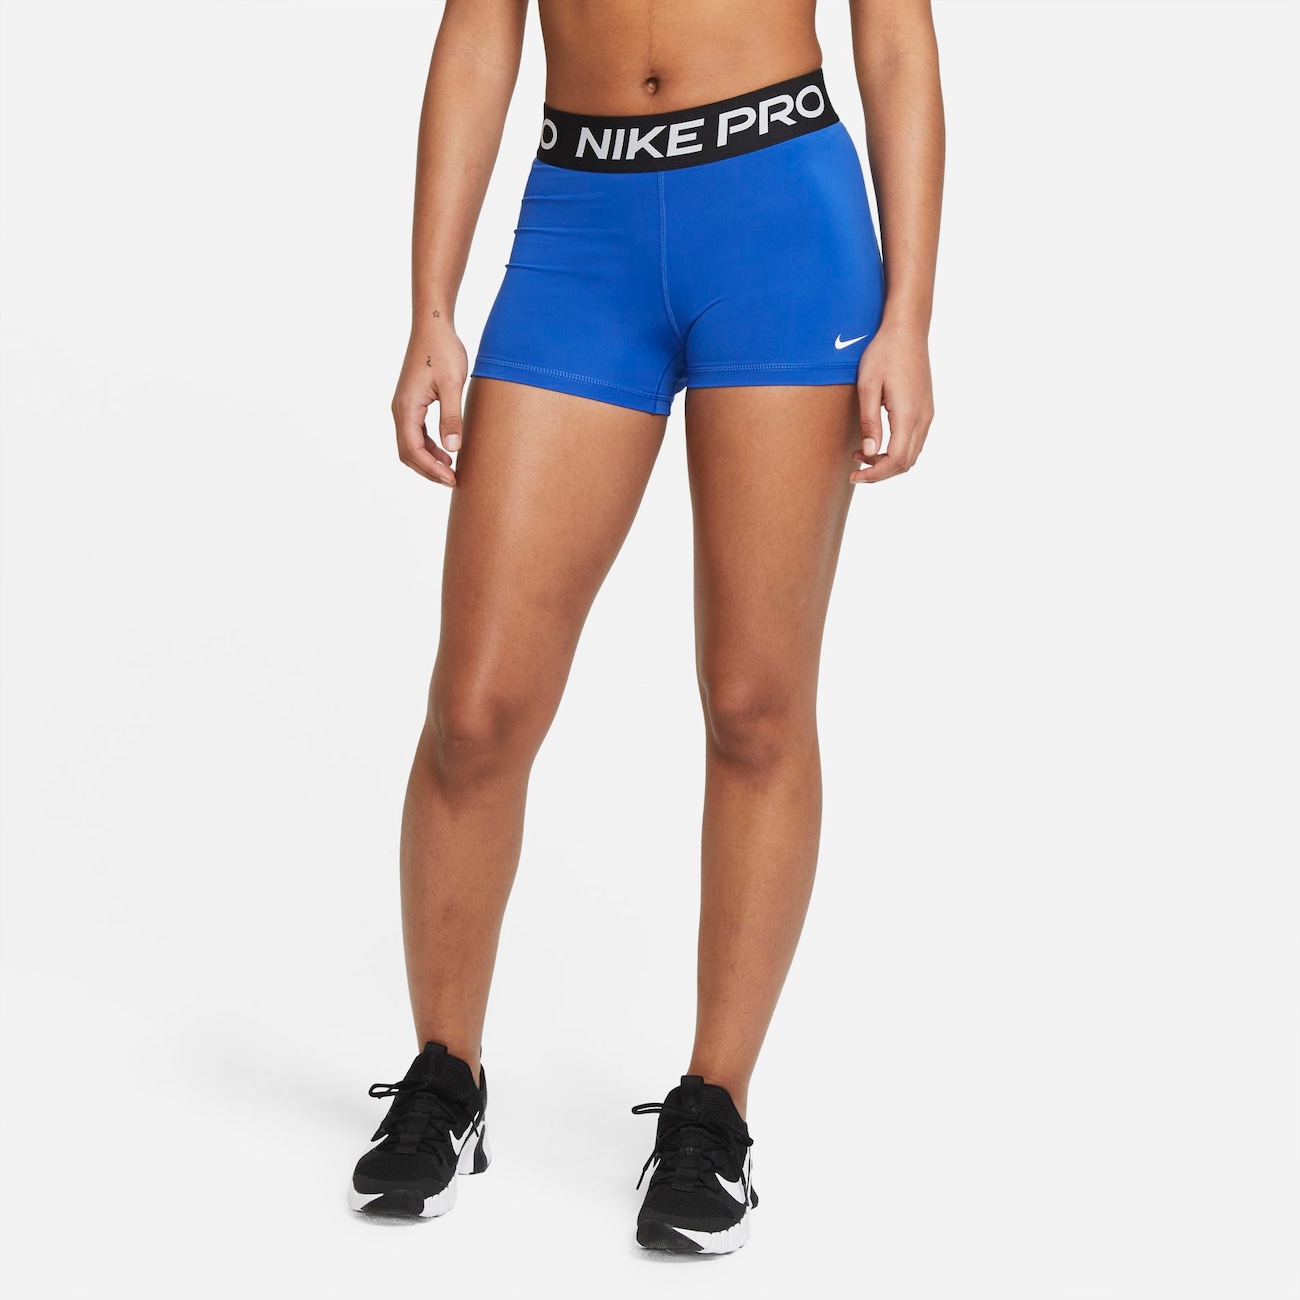 Shorts Nike Pro Feminino - Nike